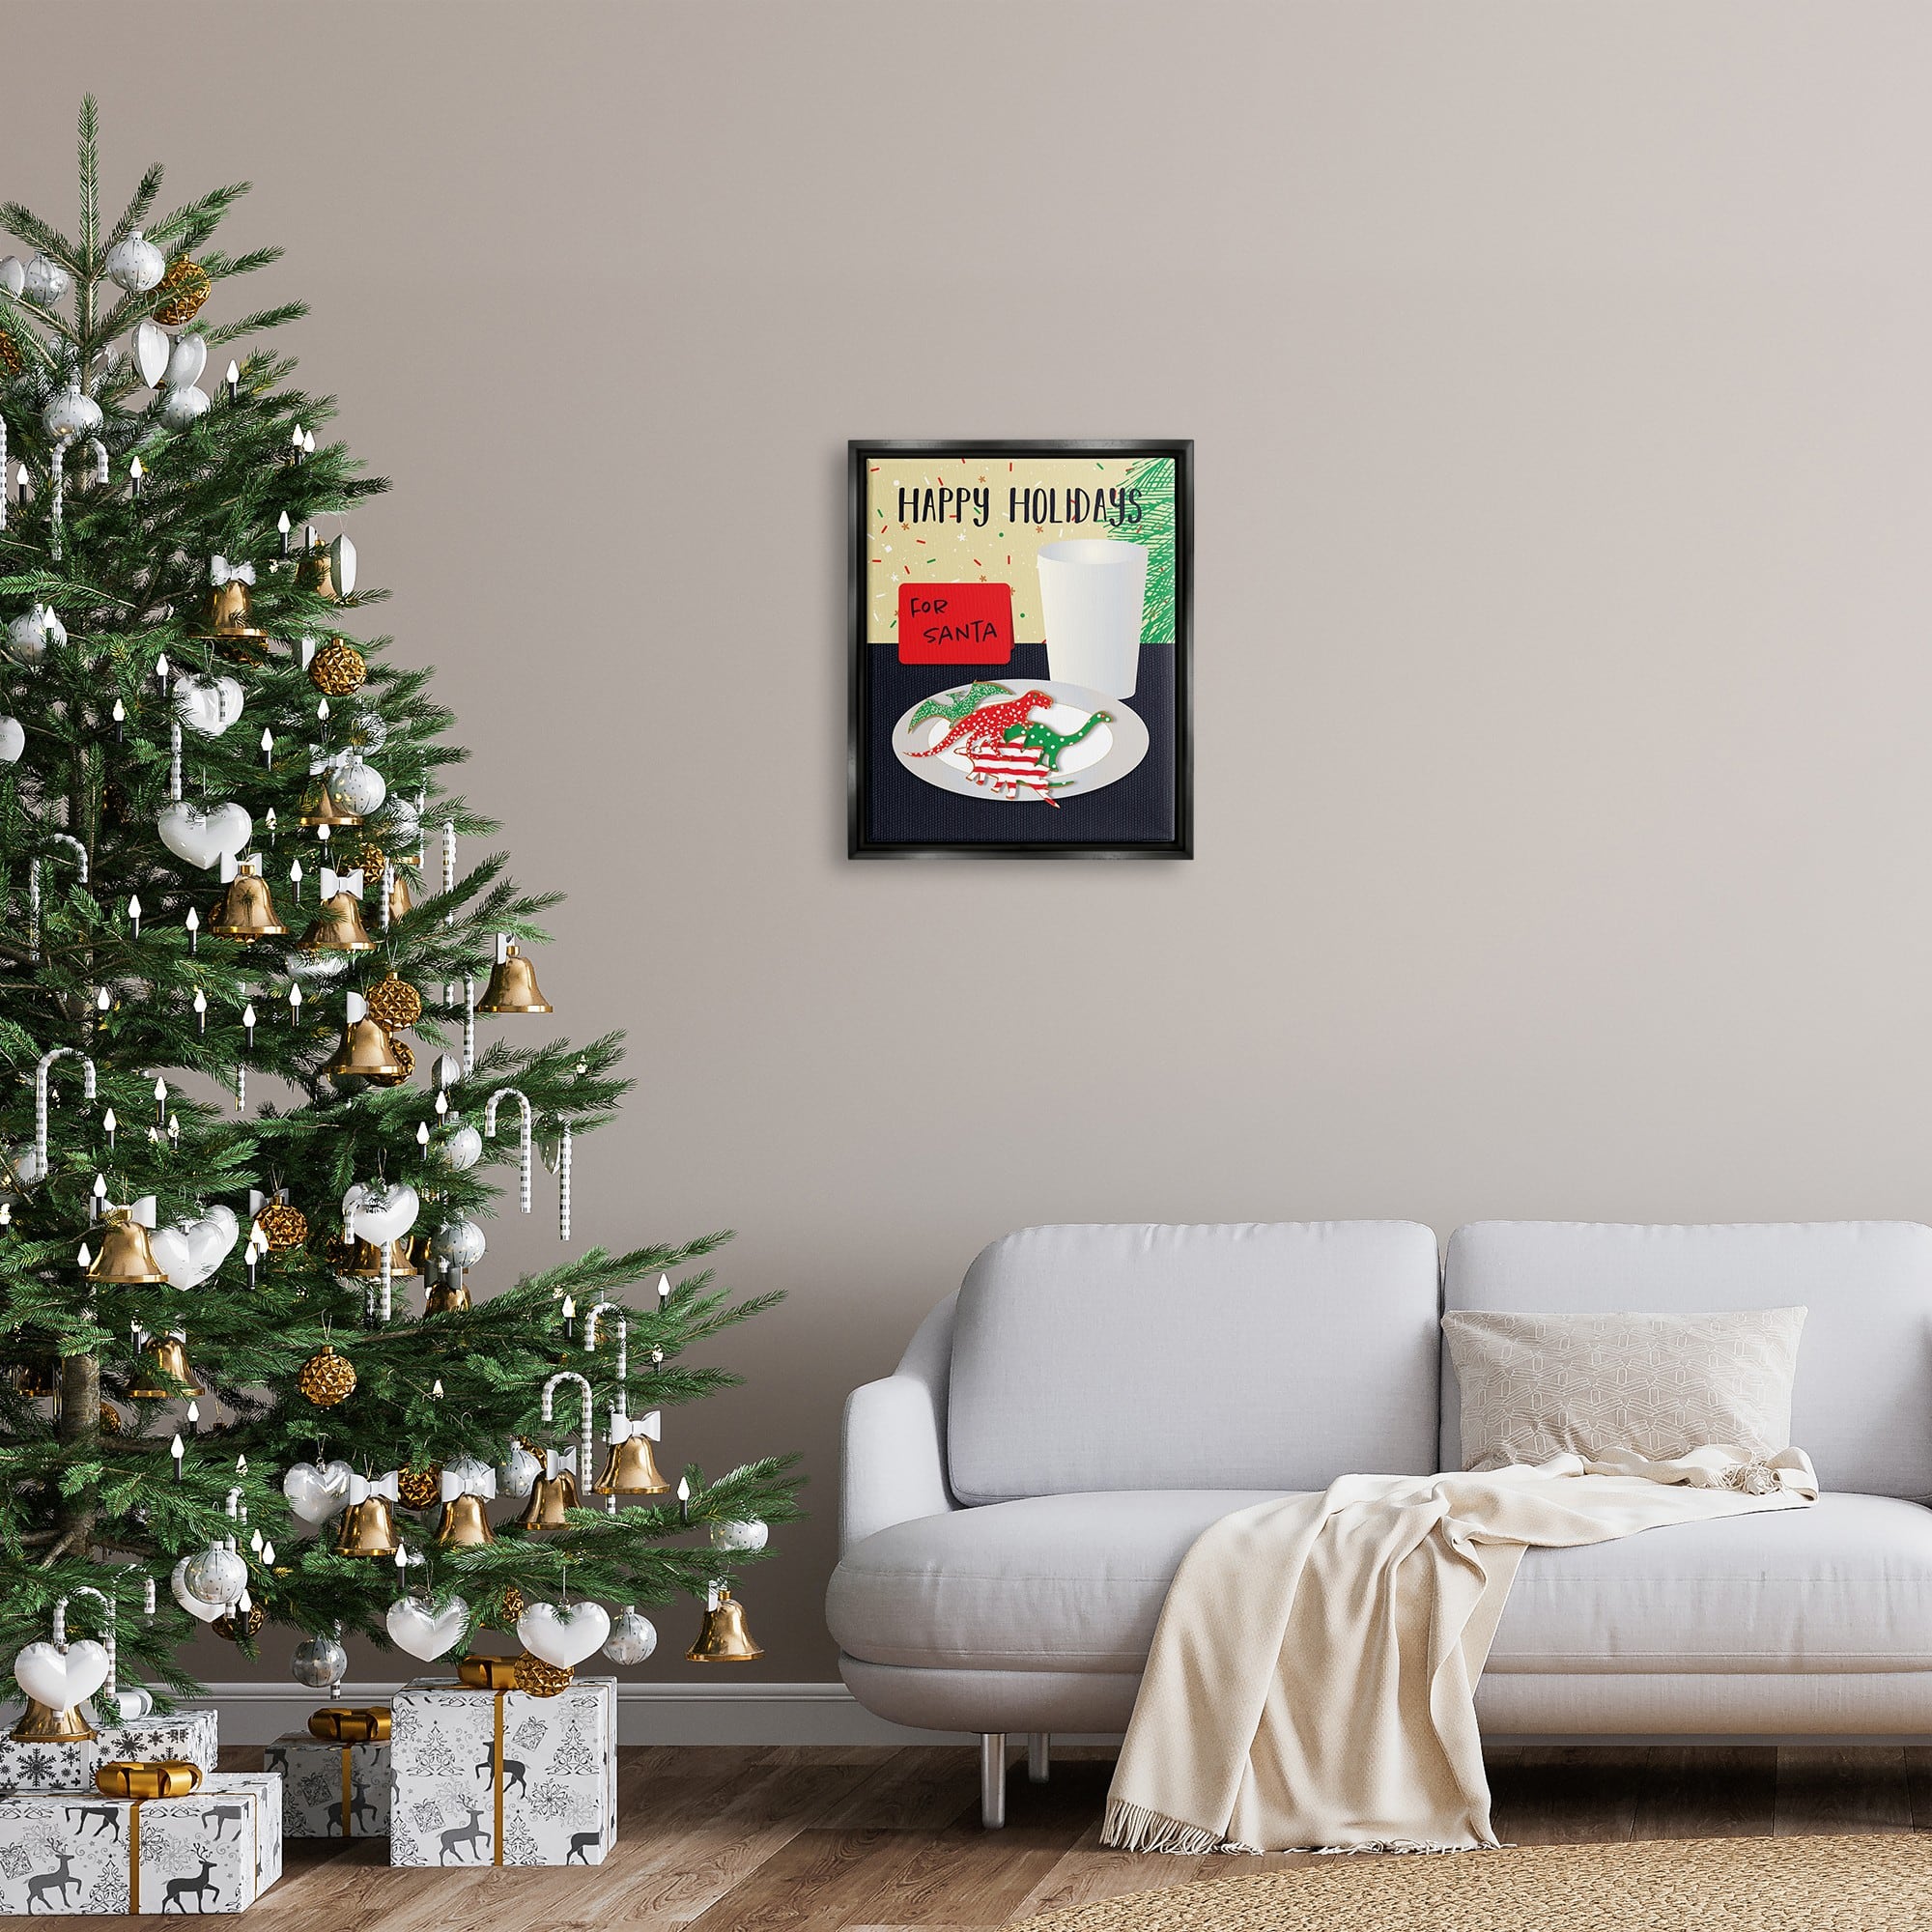 Stupell Industries Happy Holidays Dinosaur Santa Cookies Framed Floater Canvas Wall Art